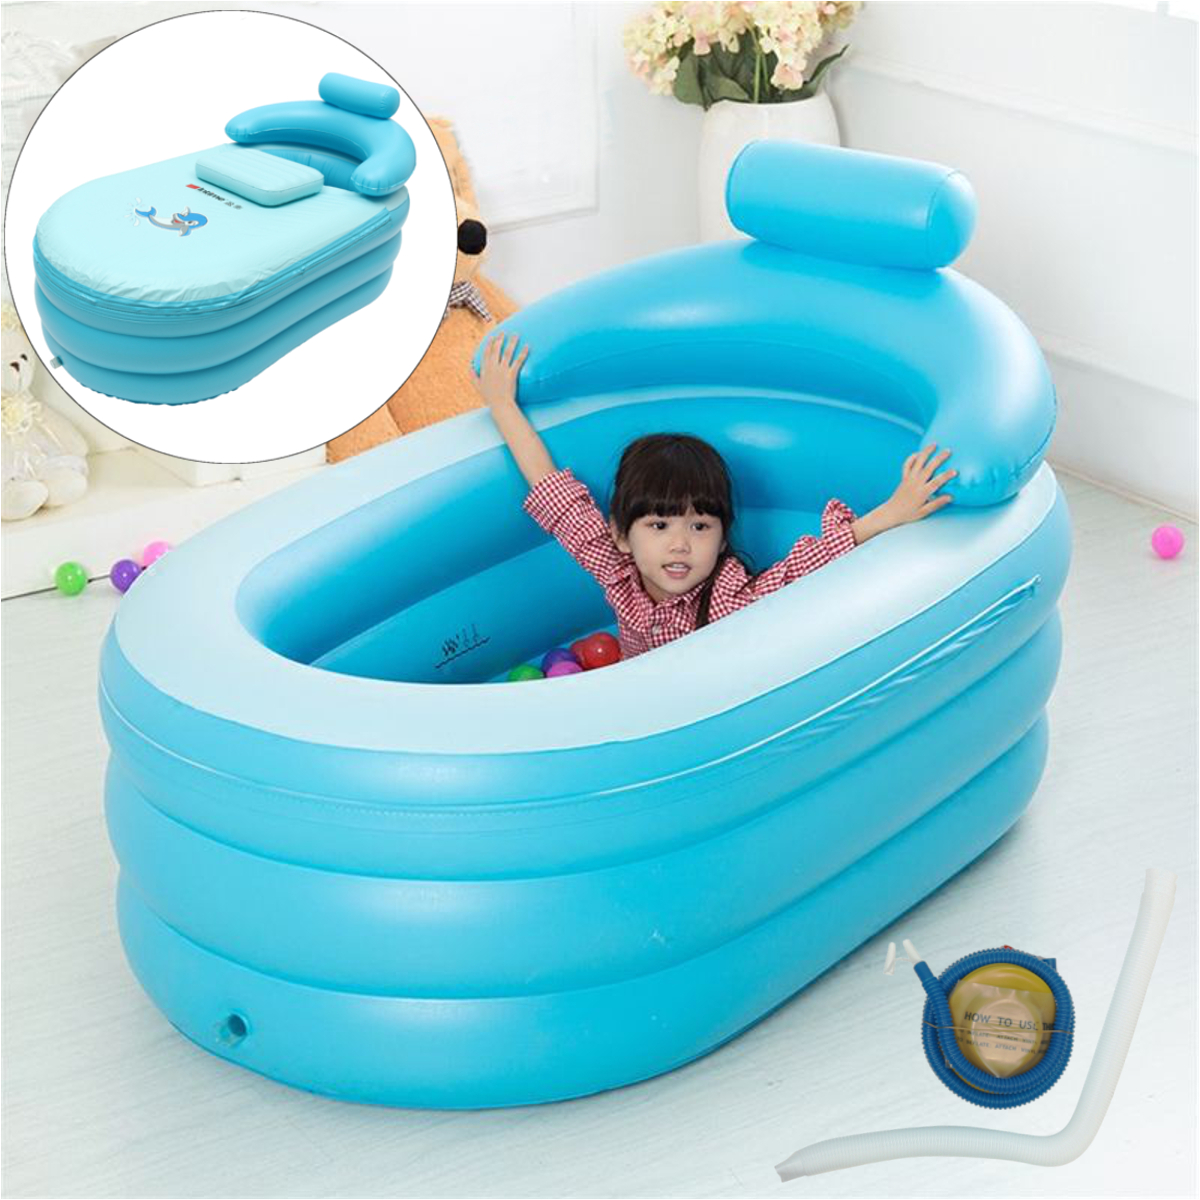 Portable Bathtub Ebay Portable Adult Child Bath Tub Pvc Portable Spa Warm